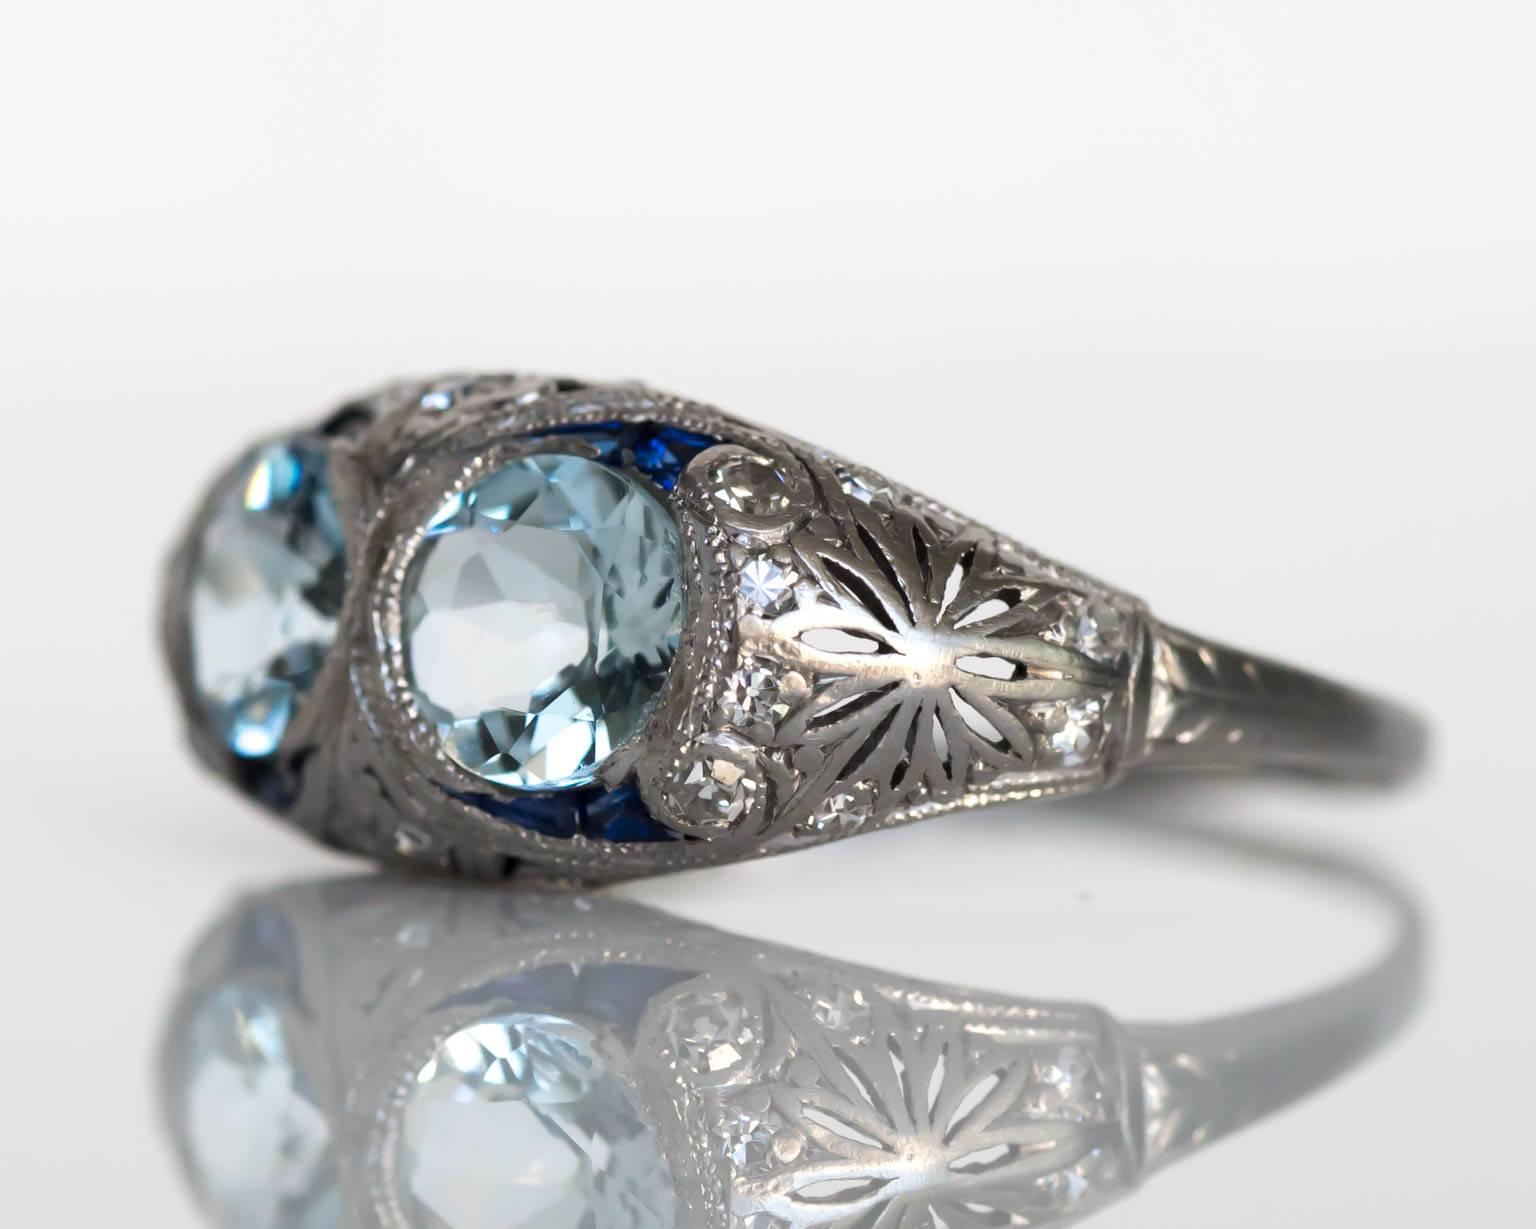 Item Details: 
Ring Size: 9
Metal Type: Platinum
Weight: 4.6 grams

Color Center Stone Details: 
Type: Aquamarine, Natural (2) 
Shape: Round
Carat Weigh: .75 carat each (1.50 carat, total weight)
Color: Fine Blue
Clarity: VS

Diamond Details:
Carat